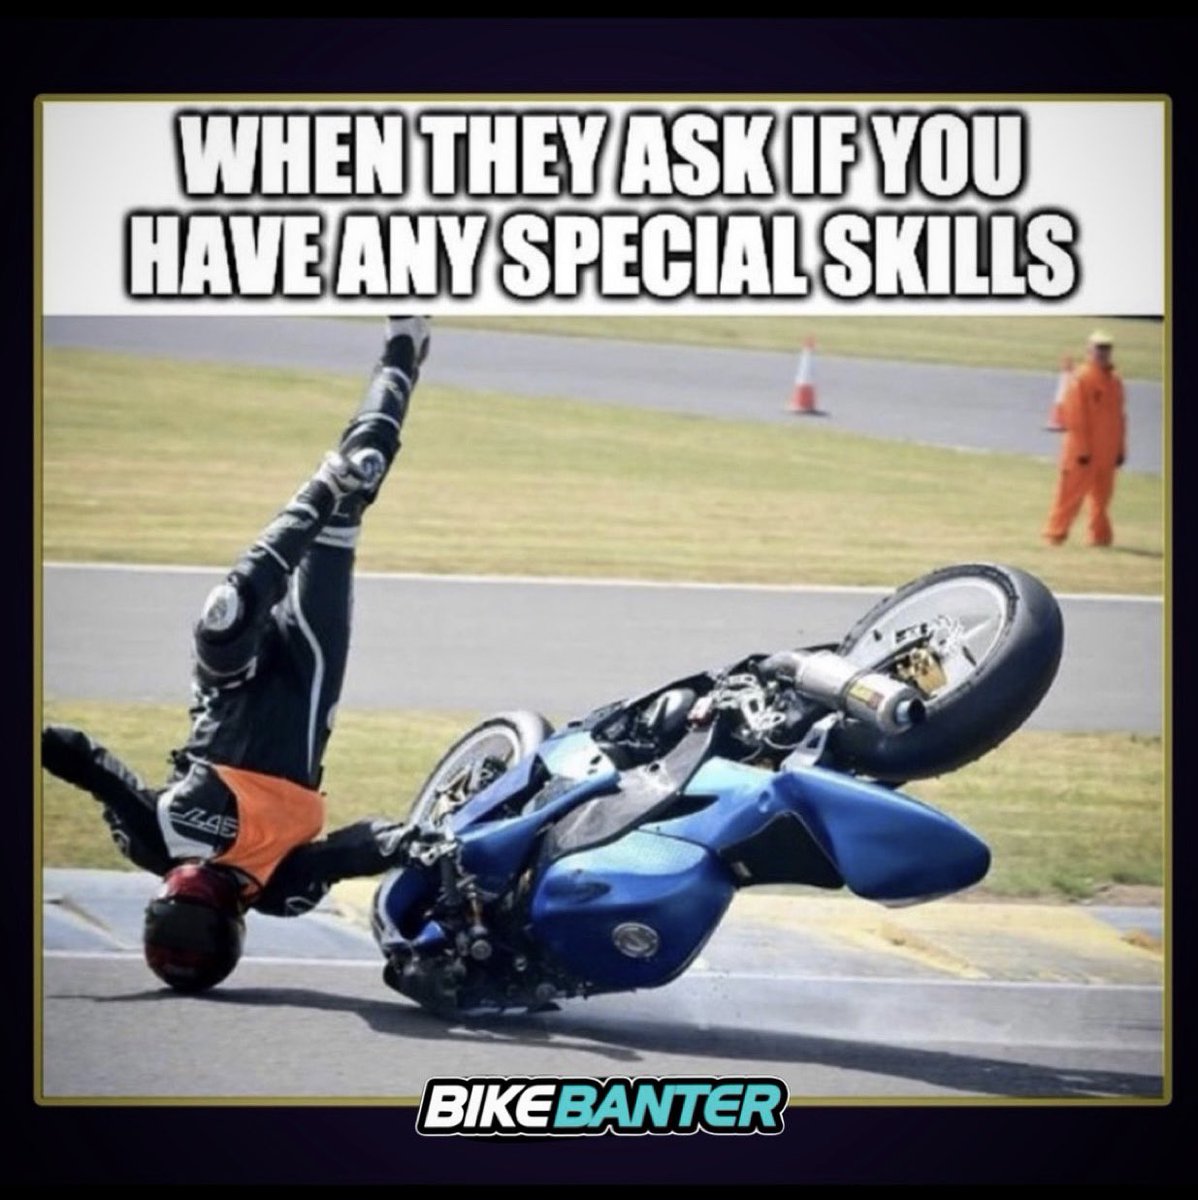 Taking notes ✍️.. . . . 👉Follow @bikebanter for daily bike content. . . #Bikebanter #suzukigsxr #kawasaki #yamaha #yamahar1 #yamahar6 #triumph #bmws1000rr #honda #cbr1000rr #cbr600rr #superbikes #memes #bikefails #motorcyclecrash #motorcyclememes #funnyvideos #fyp #youtube